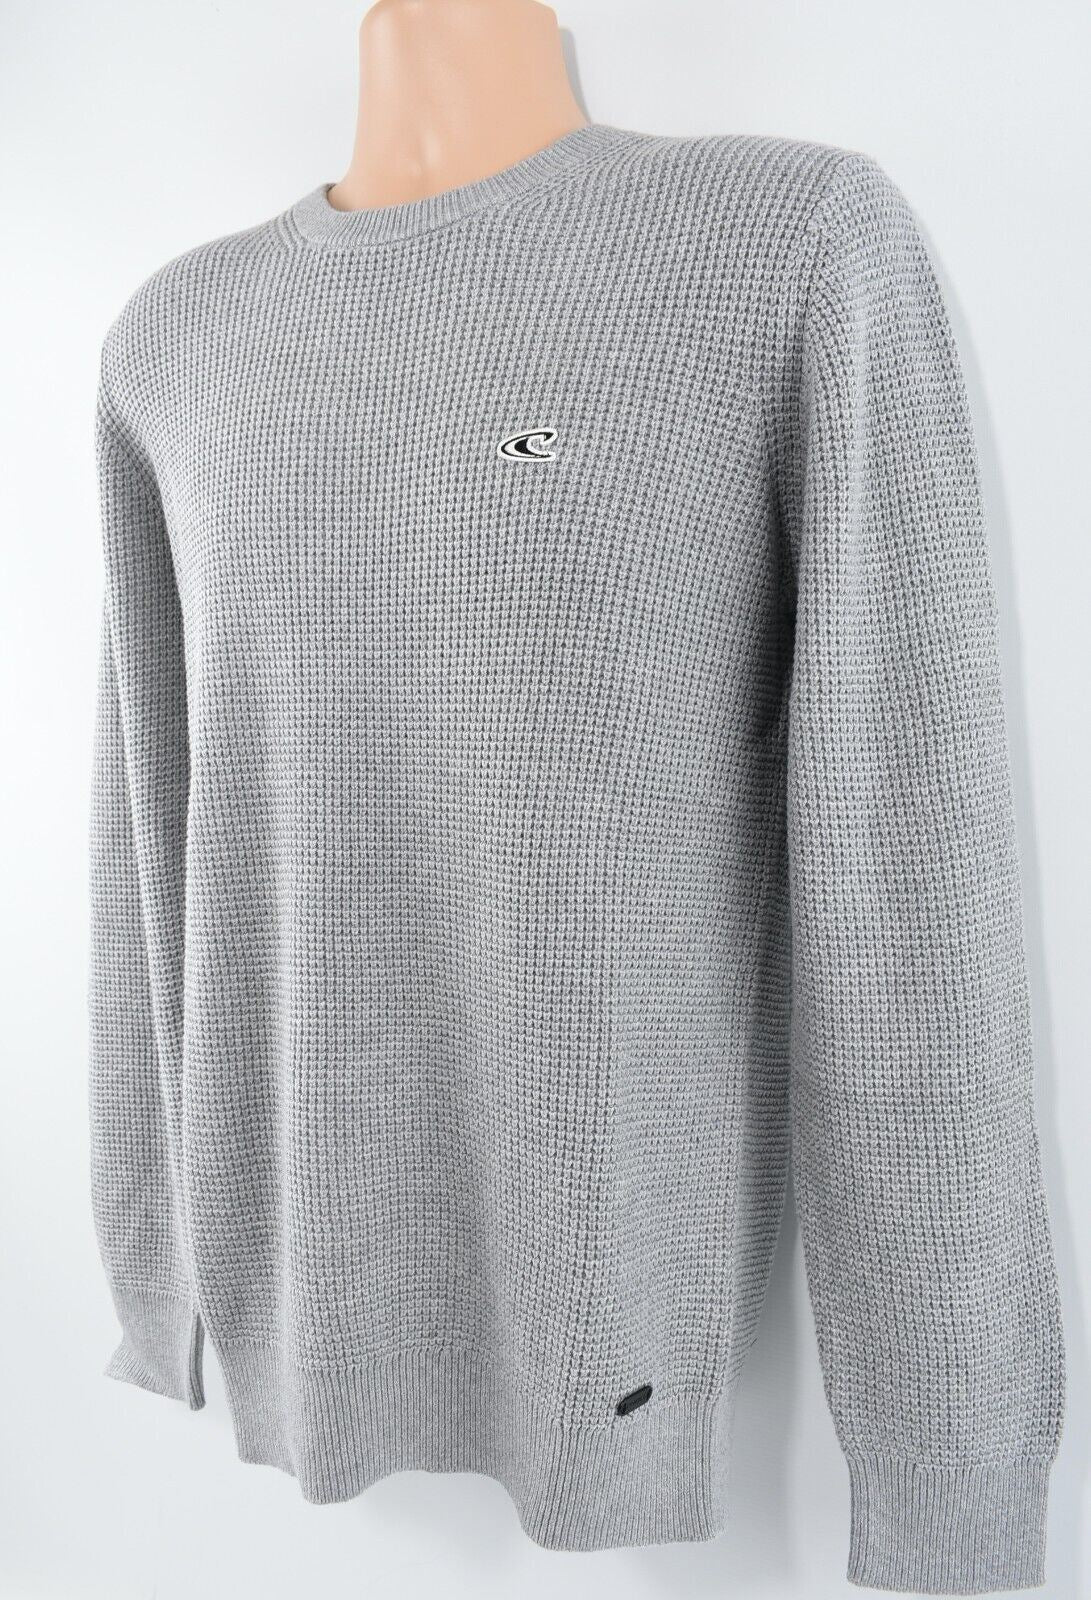 O'NEILL Men's TUCK Pullover Jumper, 100% Cotton Knit, Silver Grey, size SMALL